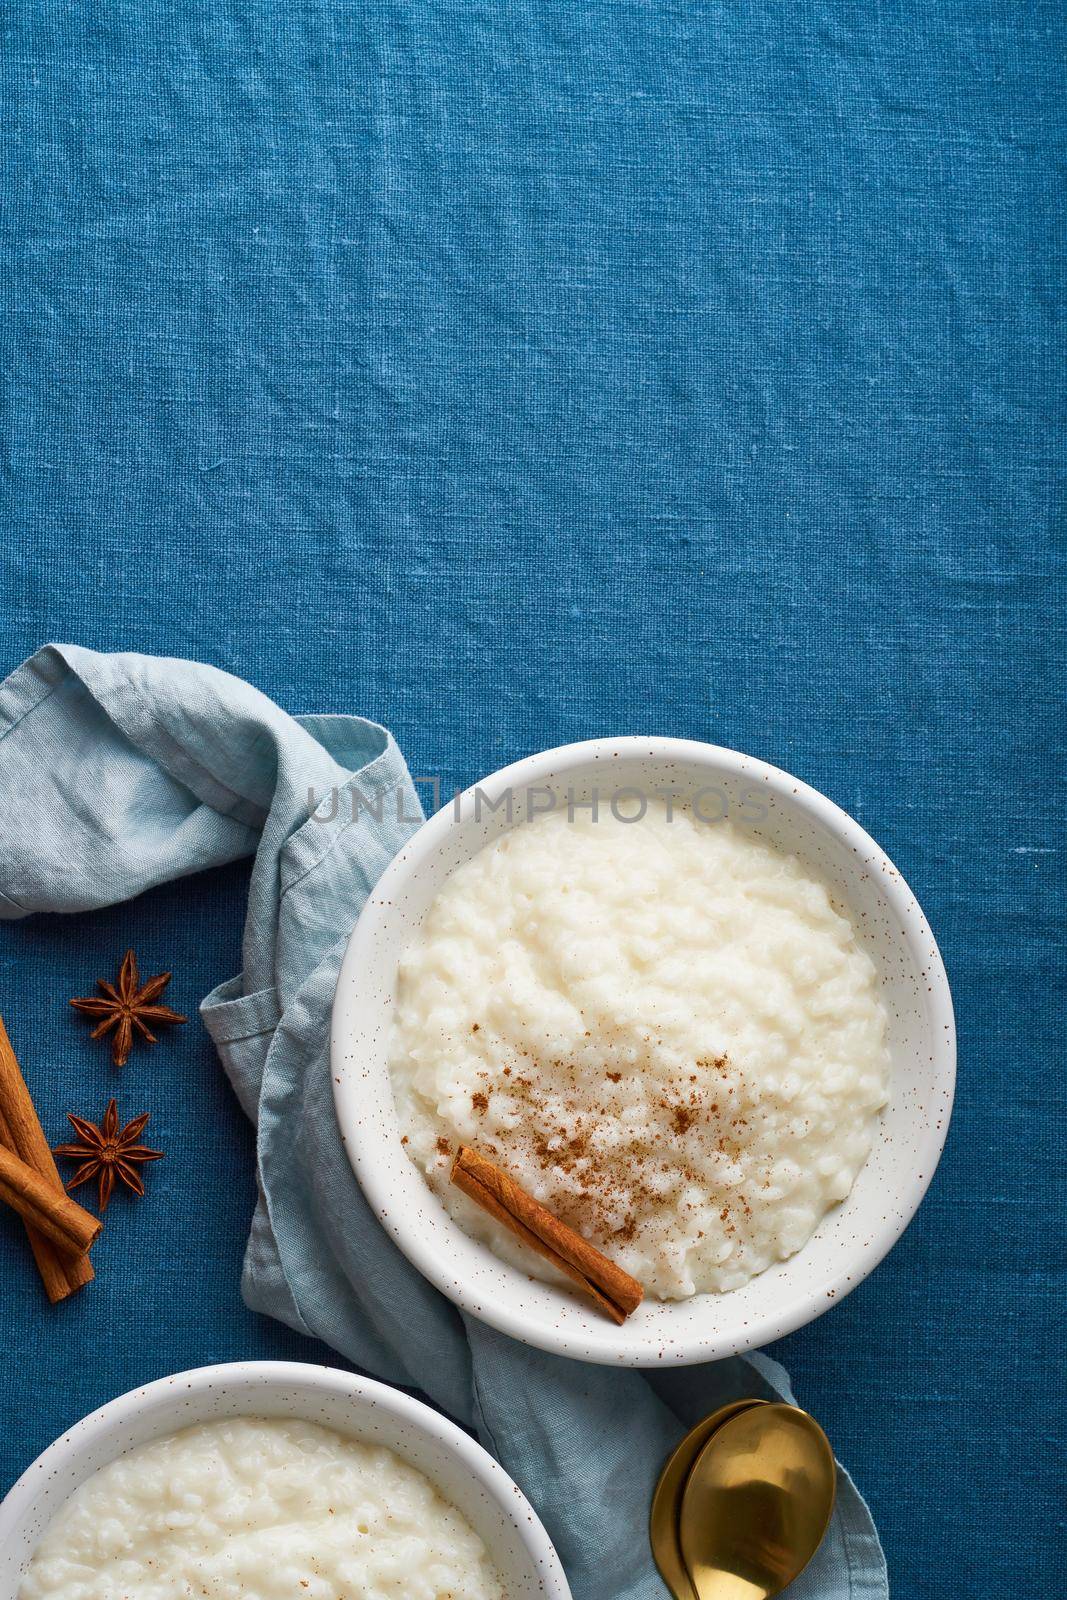 Rice pudding. French milk rice dessert. Healthy Vegan diet breakfast with coconut milk, cinnamon. Blue linen textile. Dark background. Top view, vertical, copy space